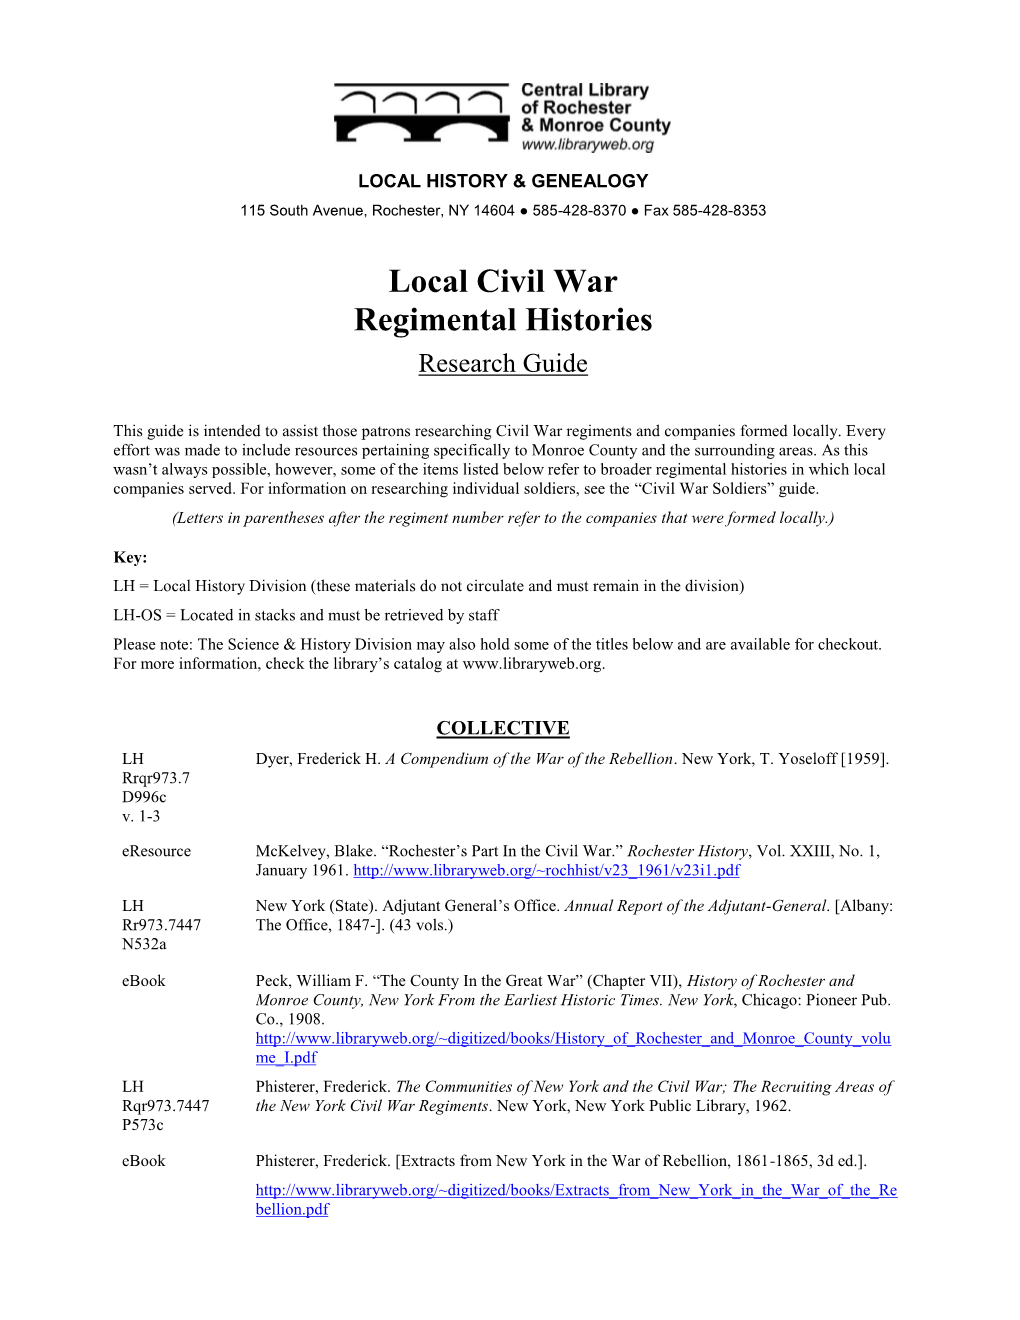 Local Civil War Regiments Research Guide